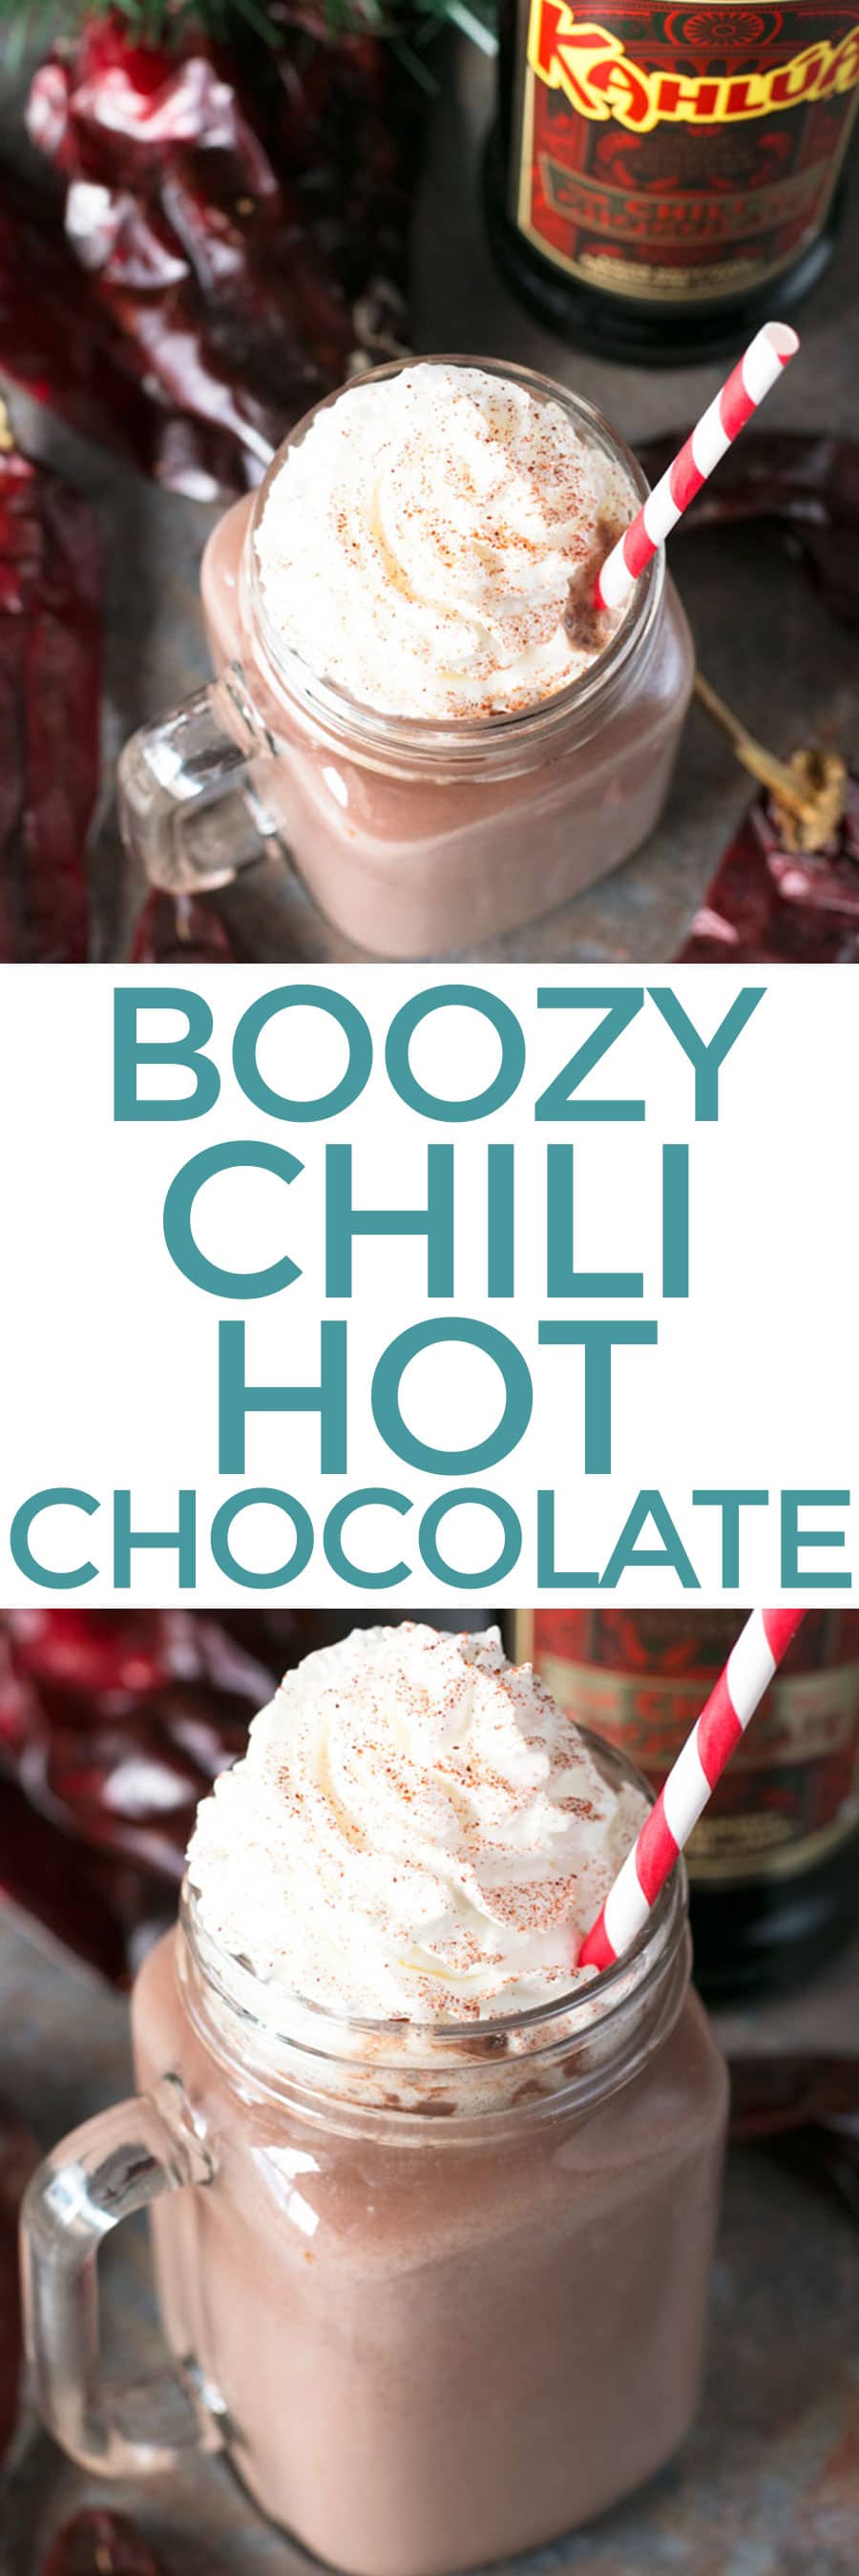 Boozy Chili Hot Chocolate | cakenknife.com